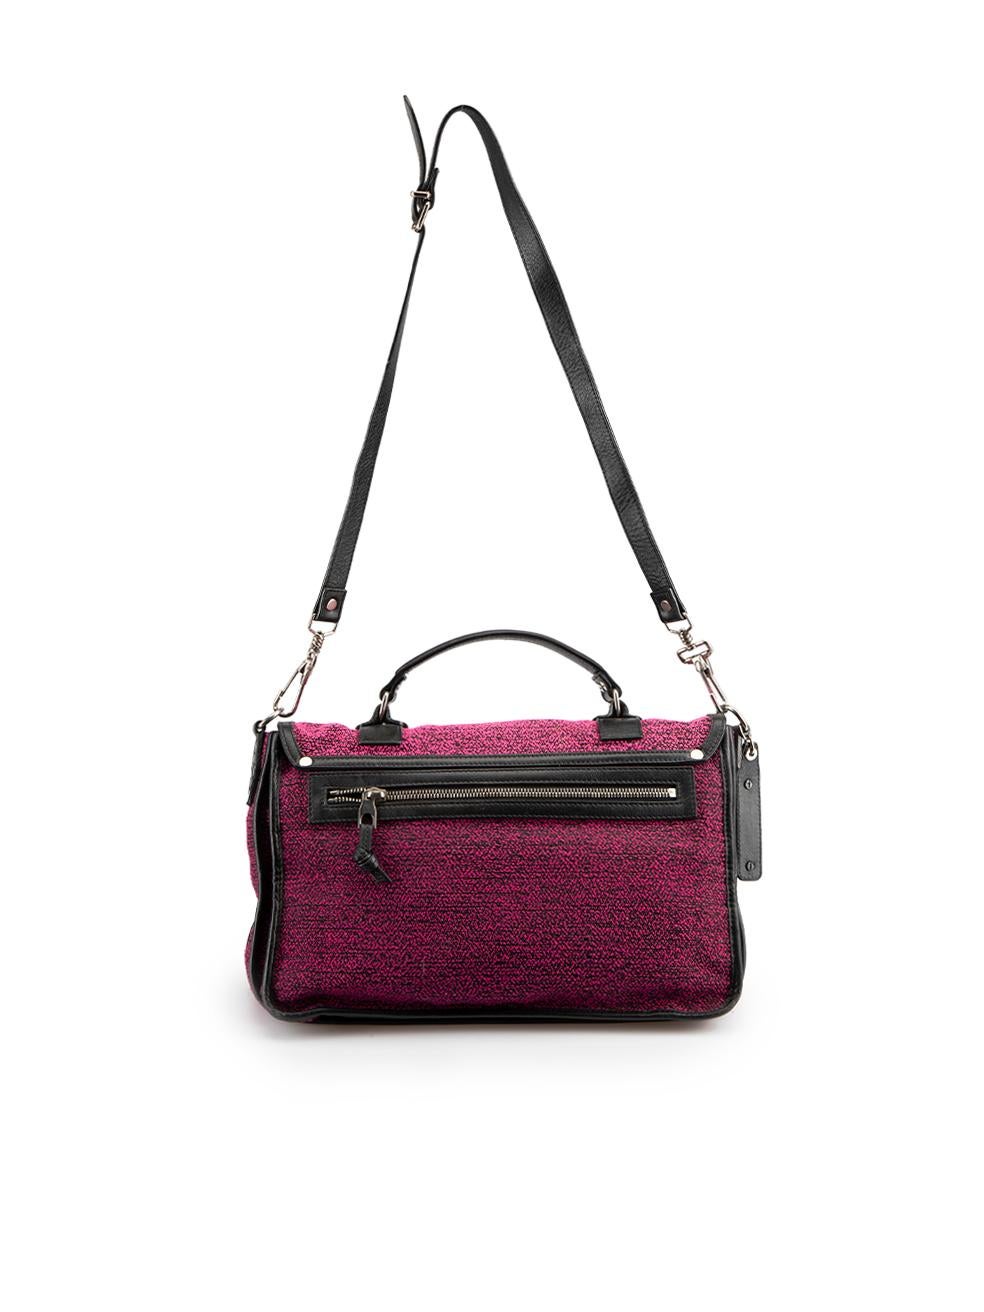 Proenza Schouler Women's Pink Tweed & Calfskin Leather Satchel Bag In Good Condition For Sale In London, GB